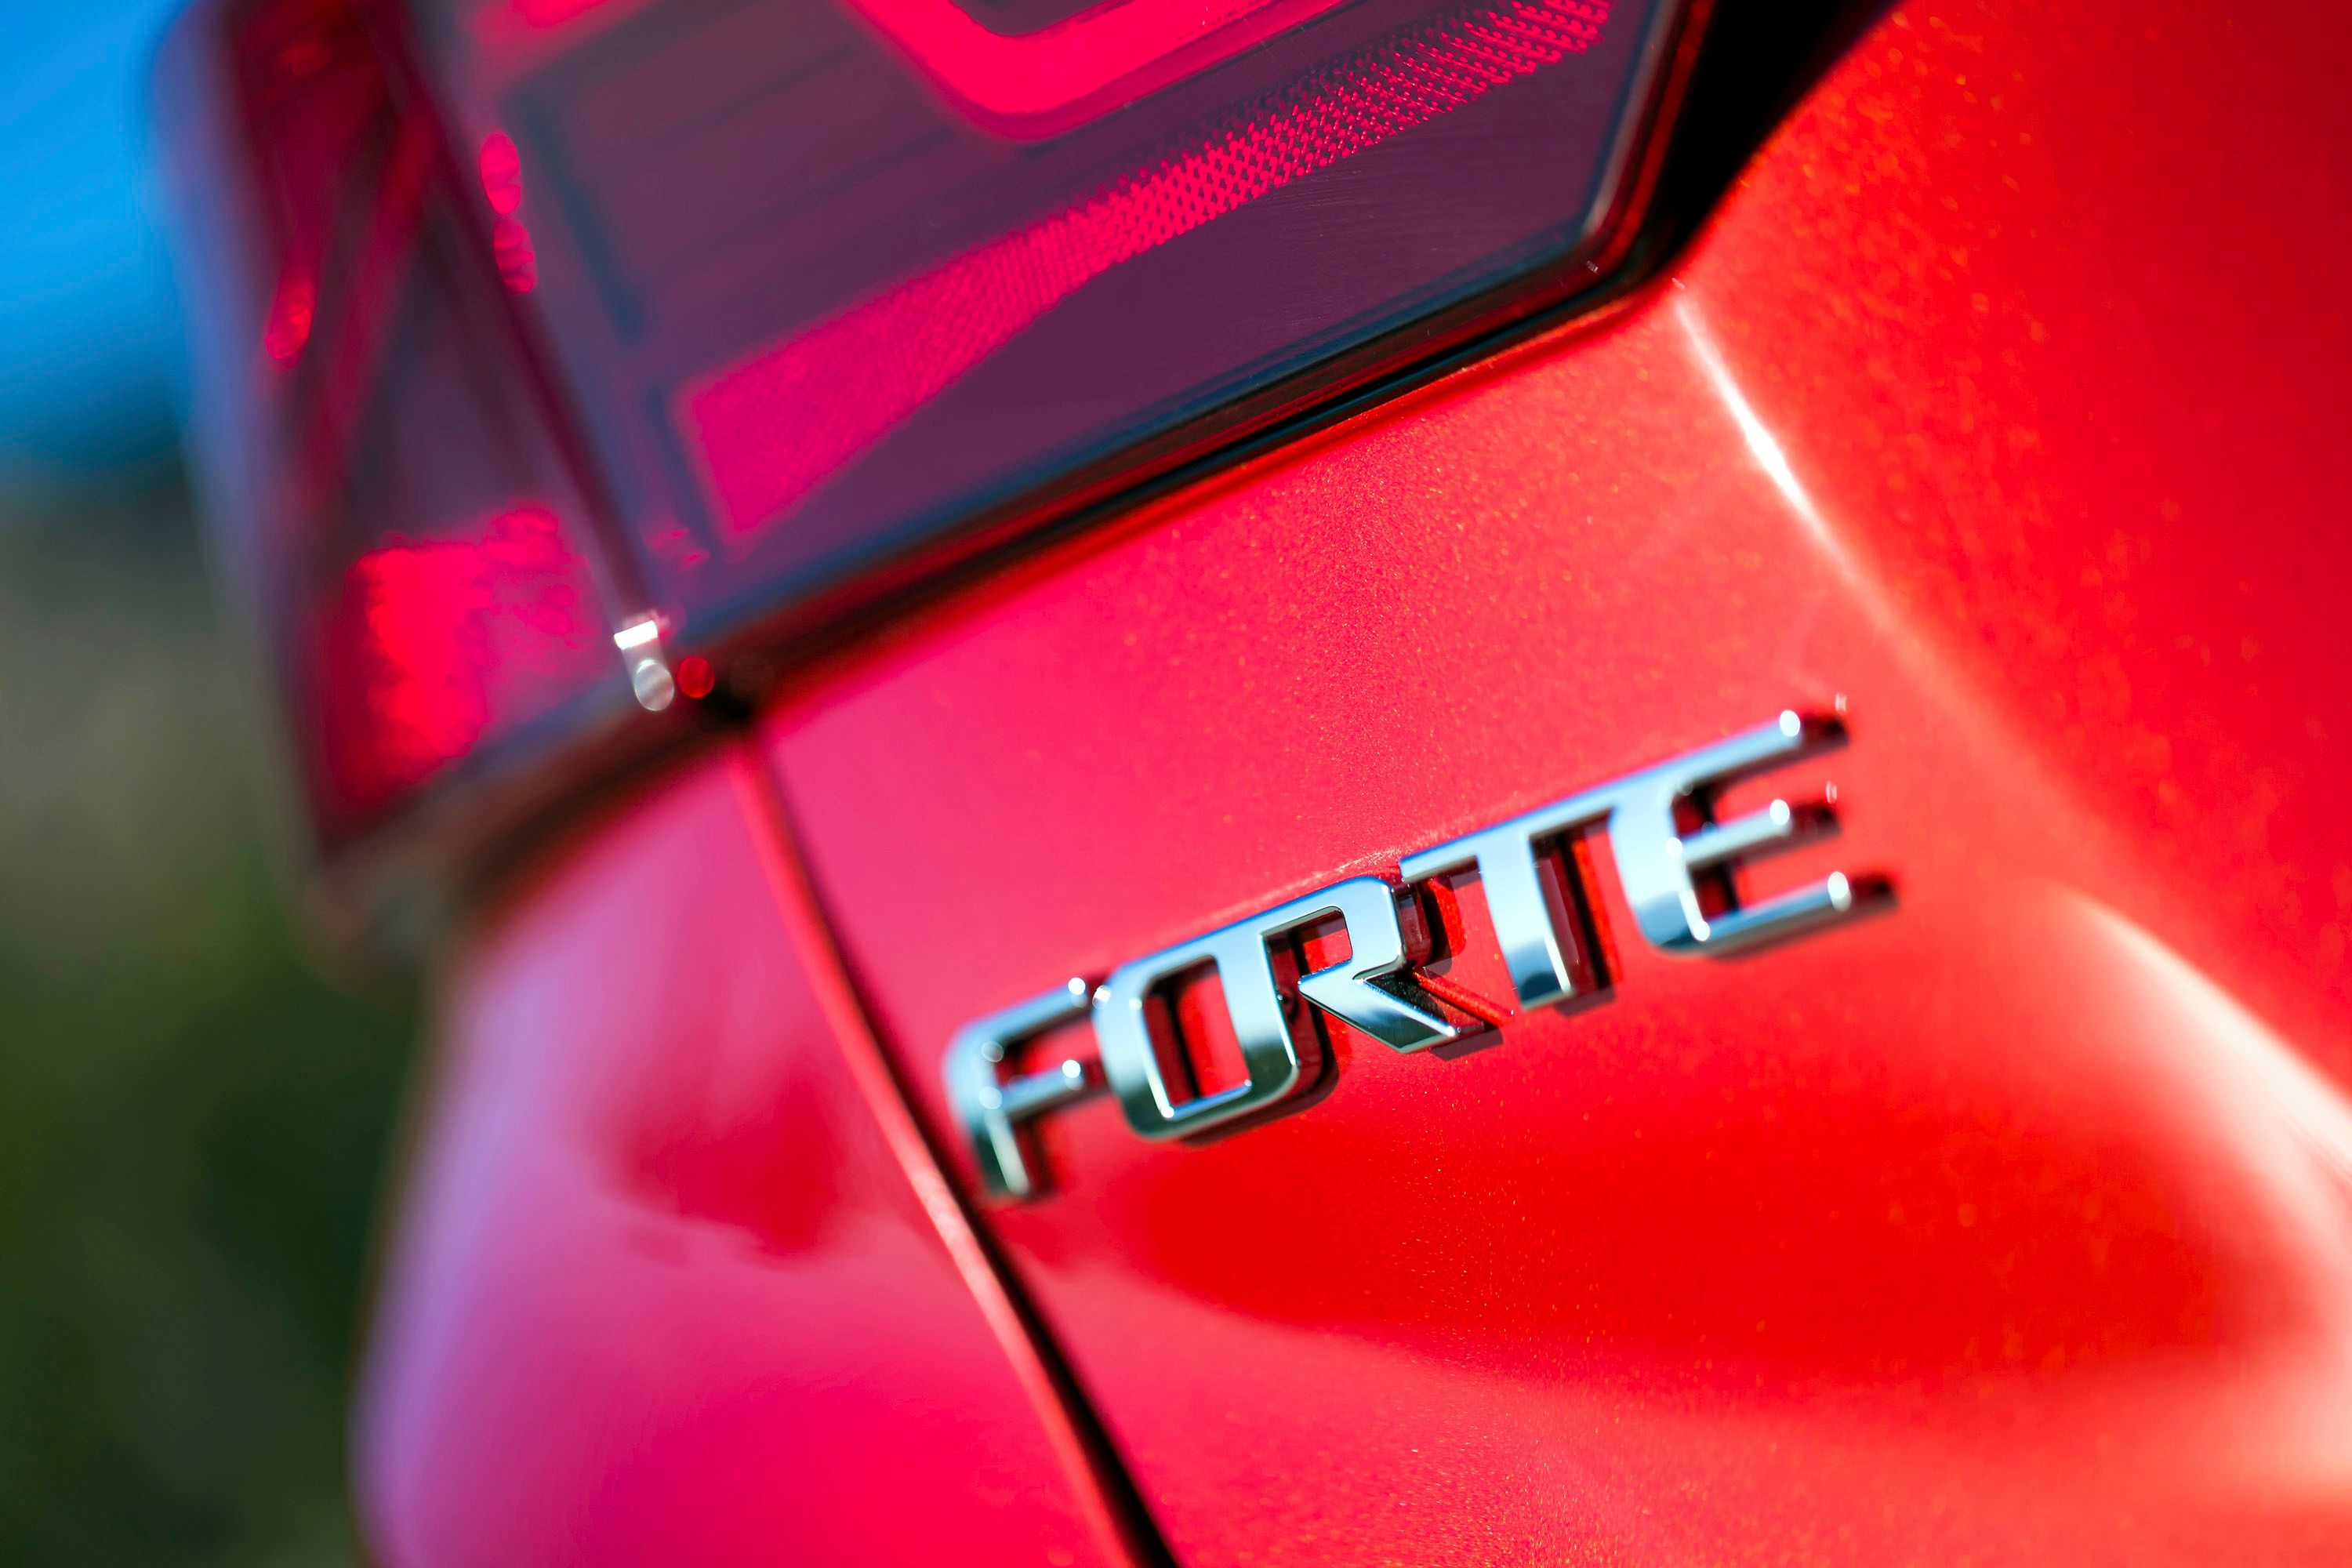 2019 Kia Forte